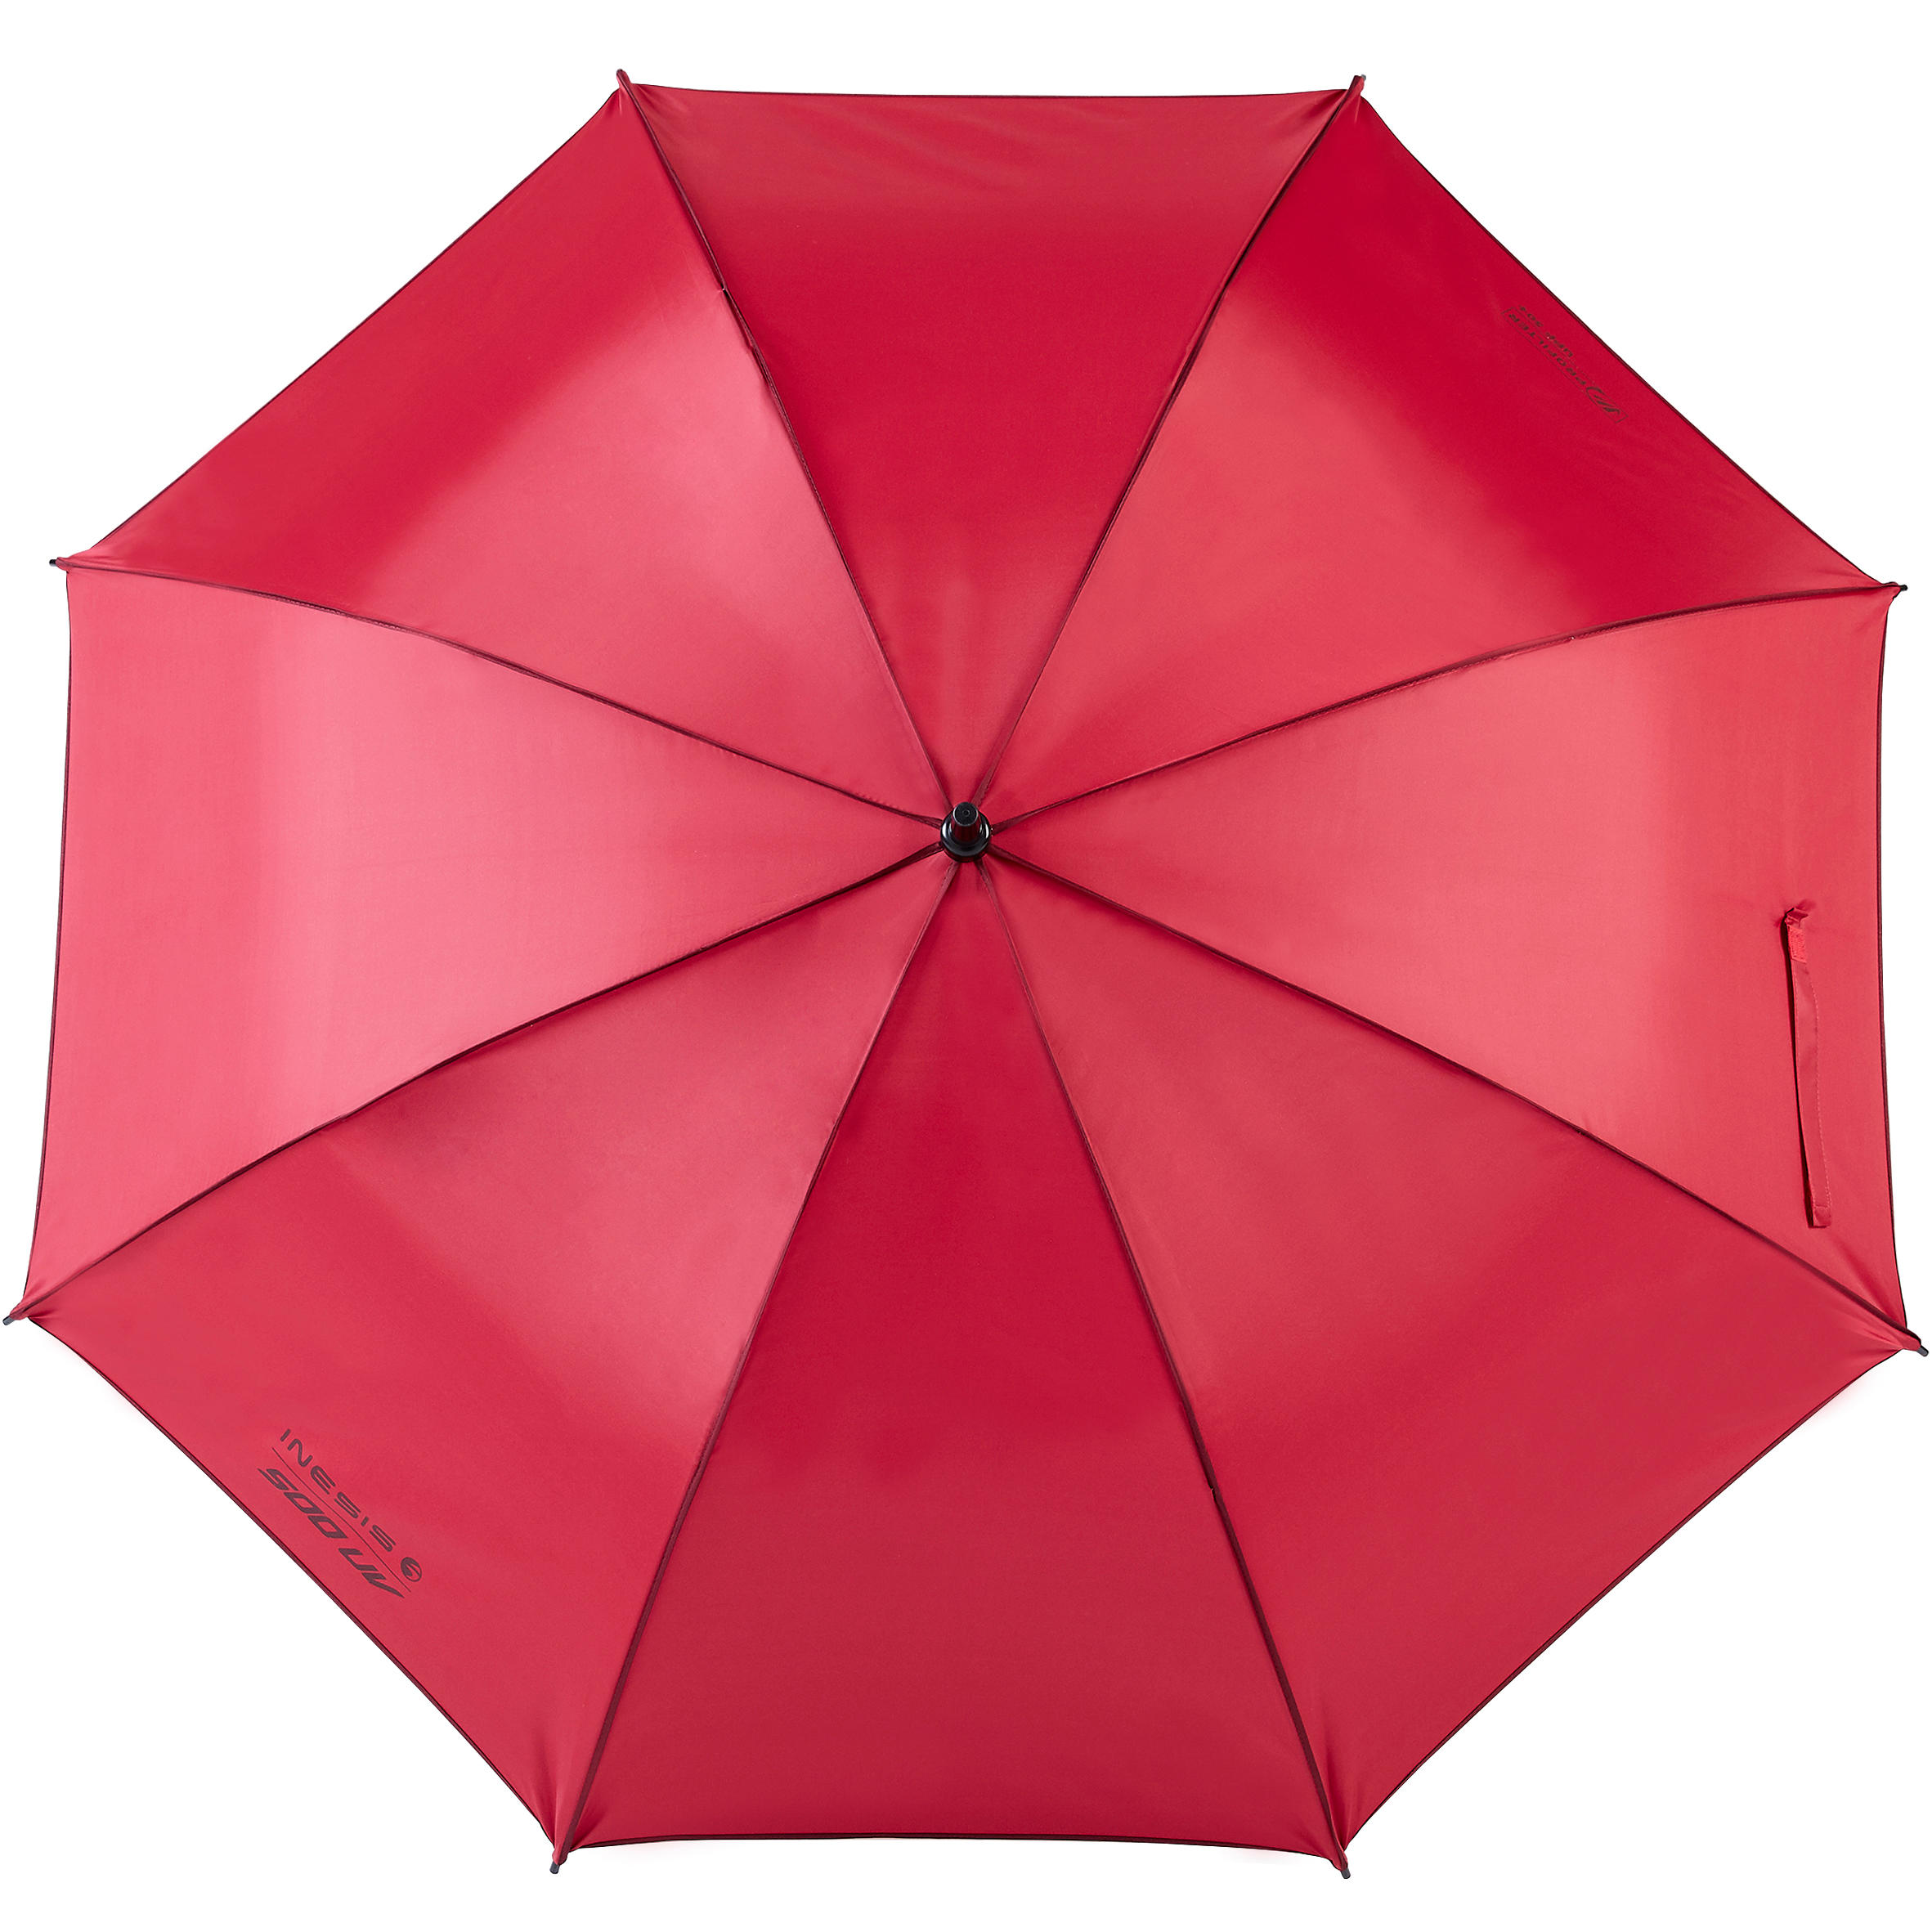 decathlon umbrella online